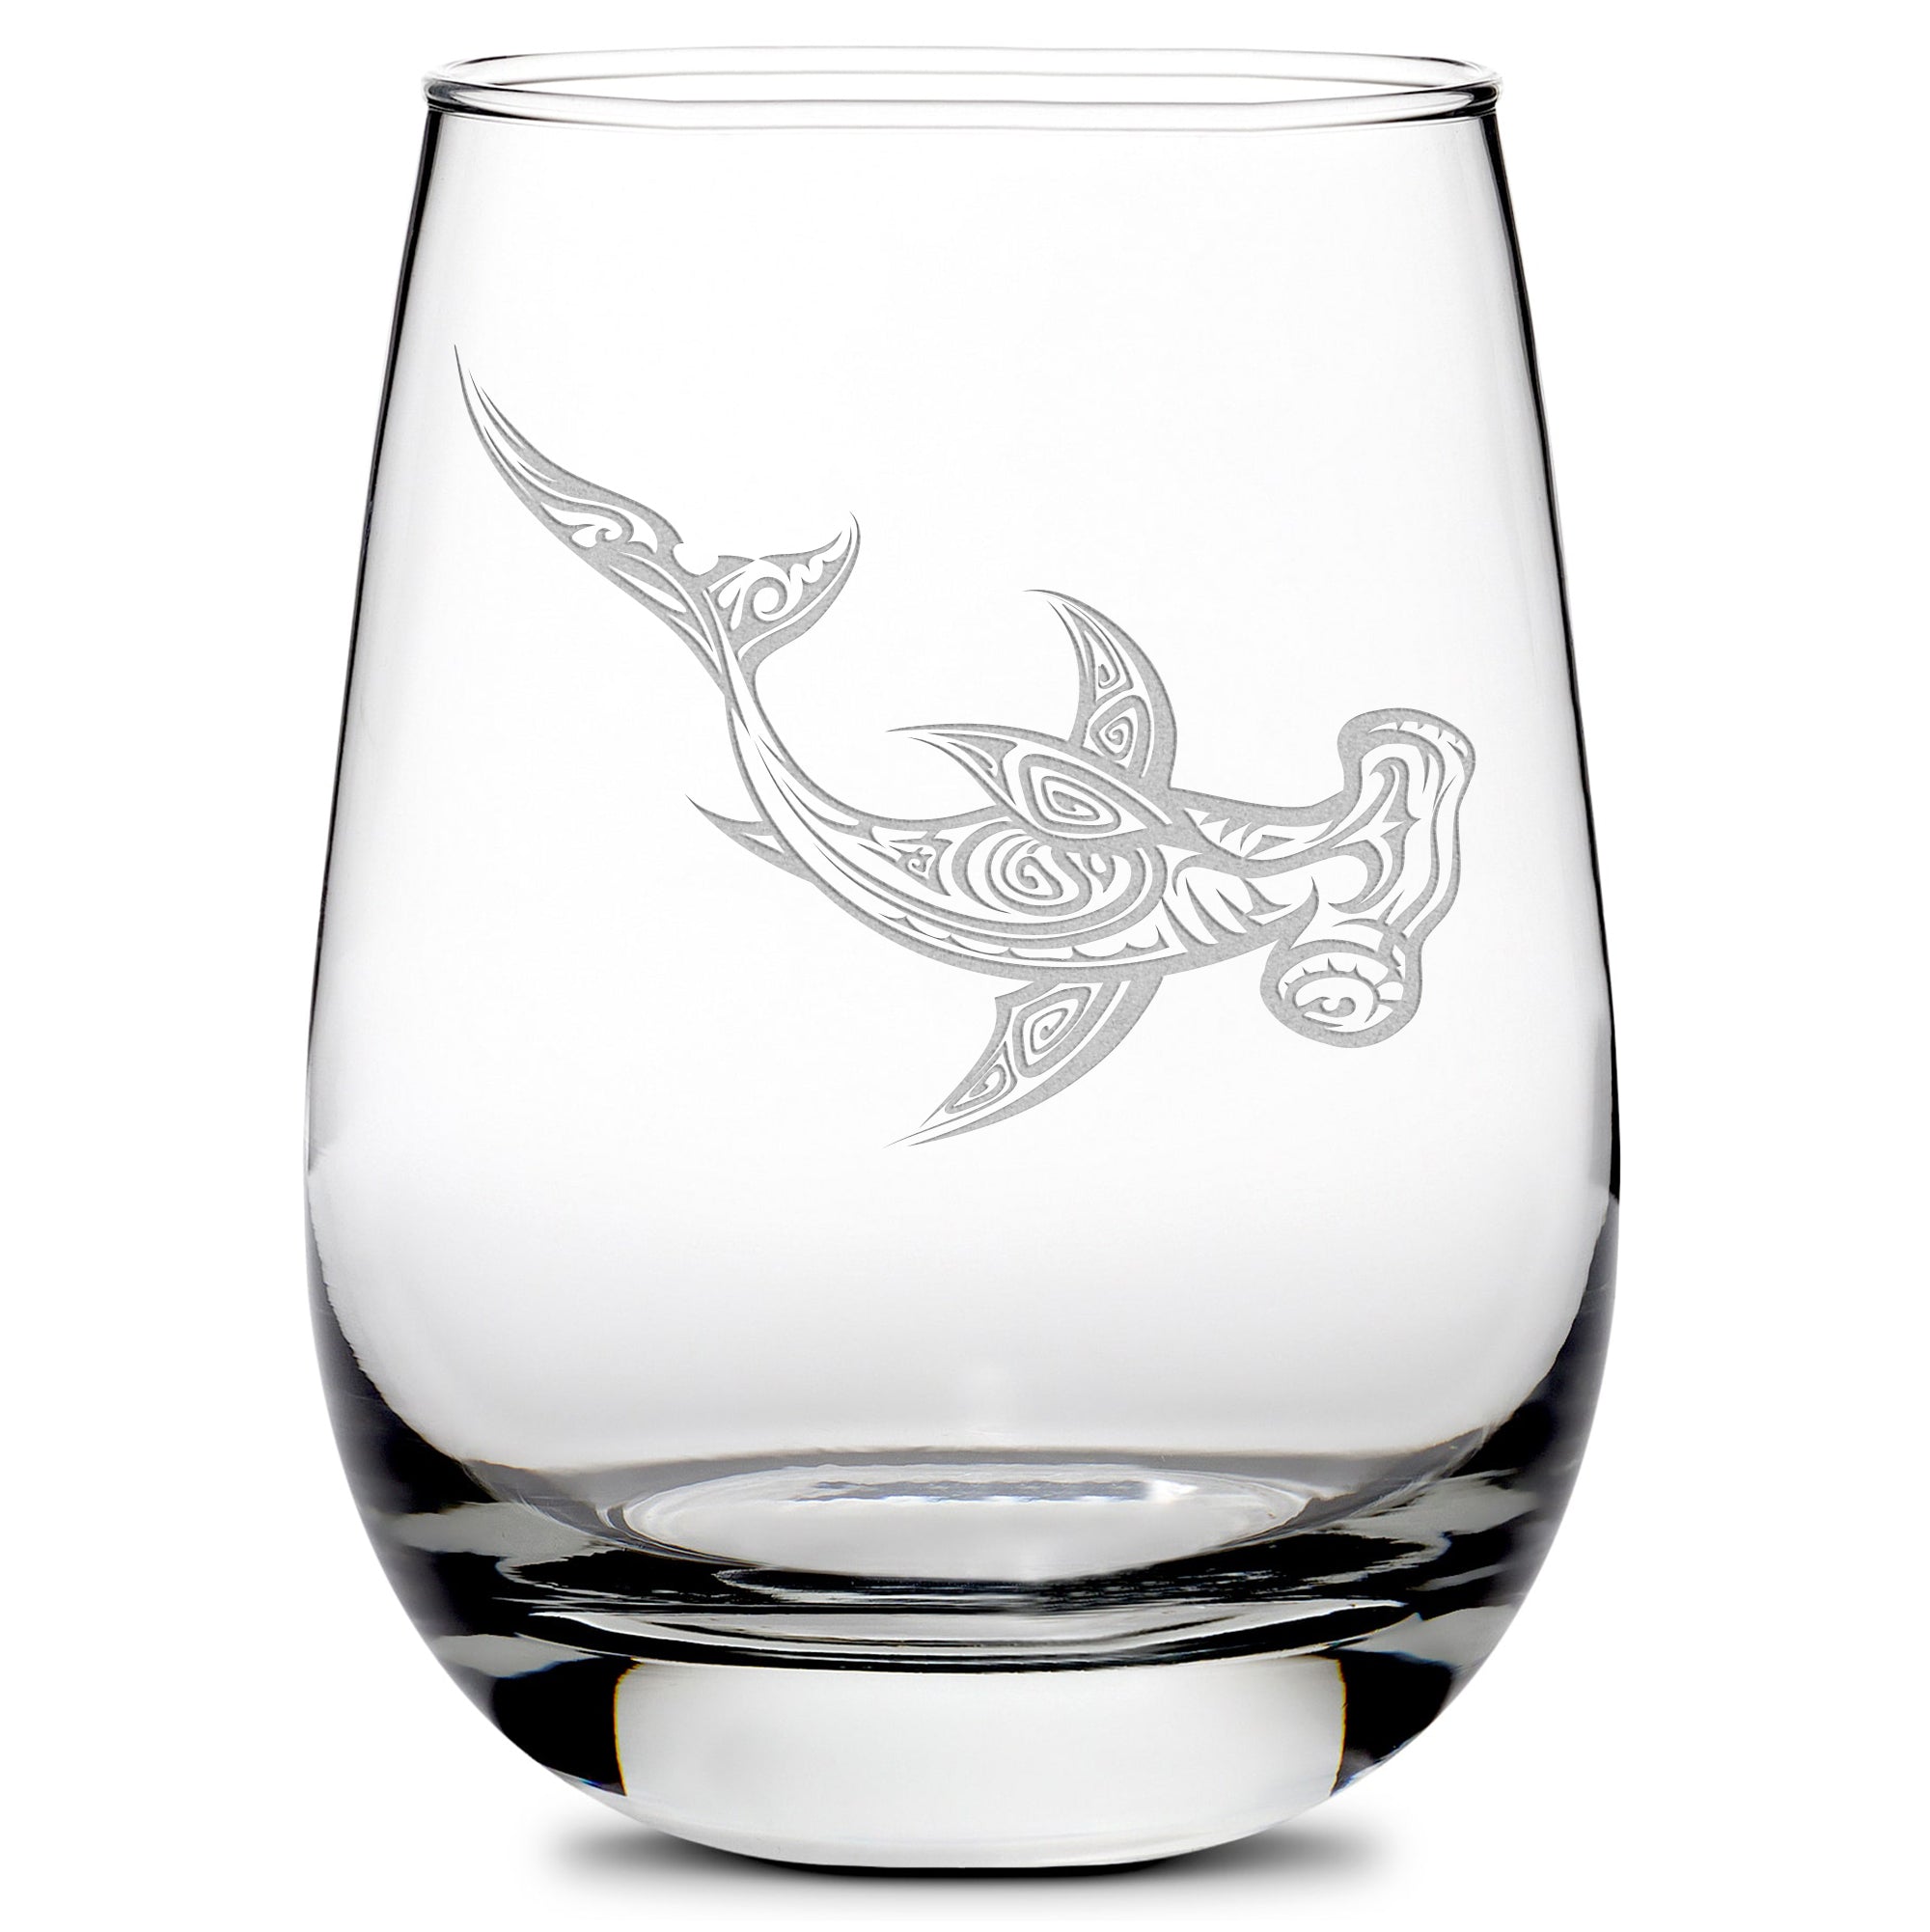 Premium Wine Glass, Hammerhead Shark Design, 16oz, Laser Etched or Hand Etched